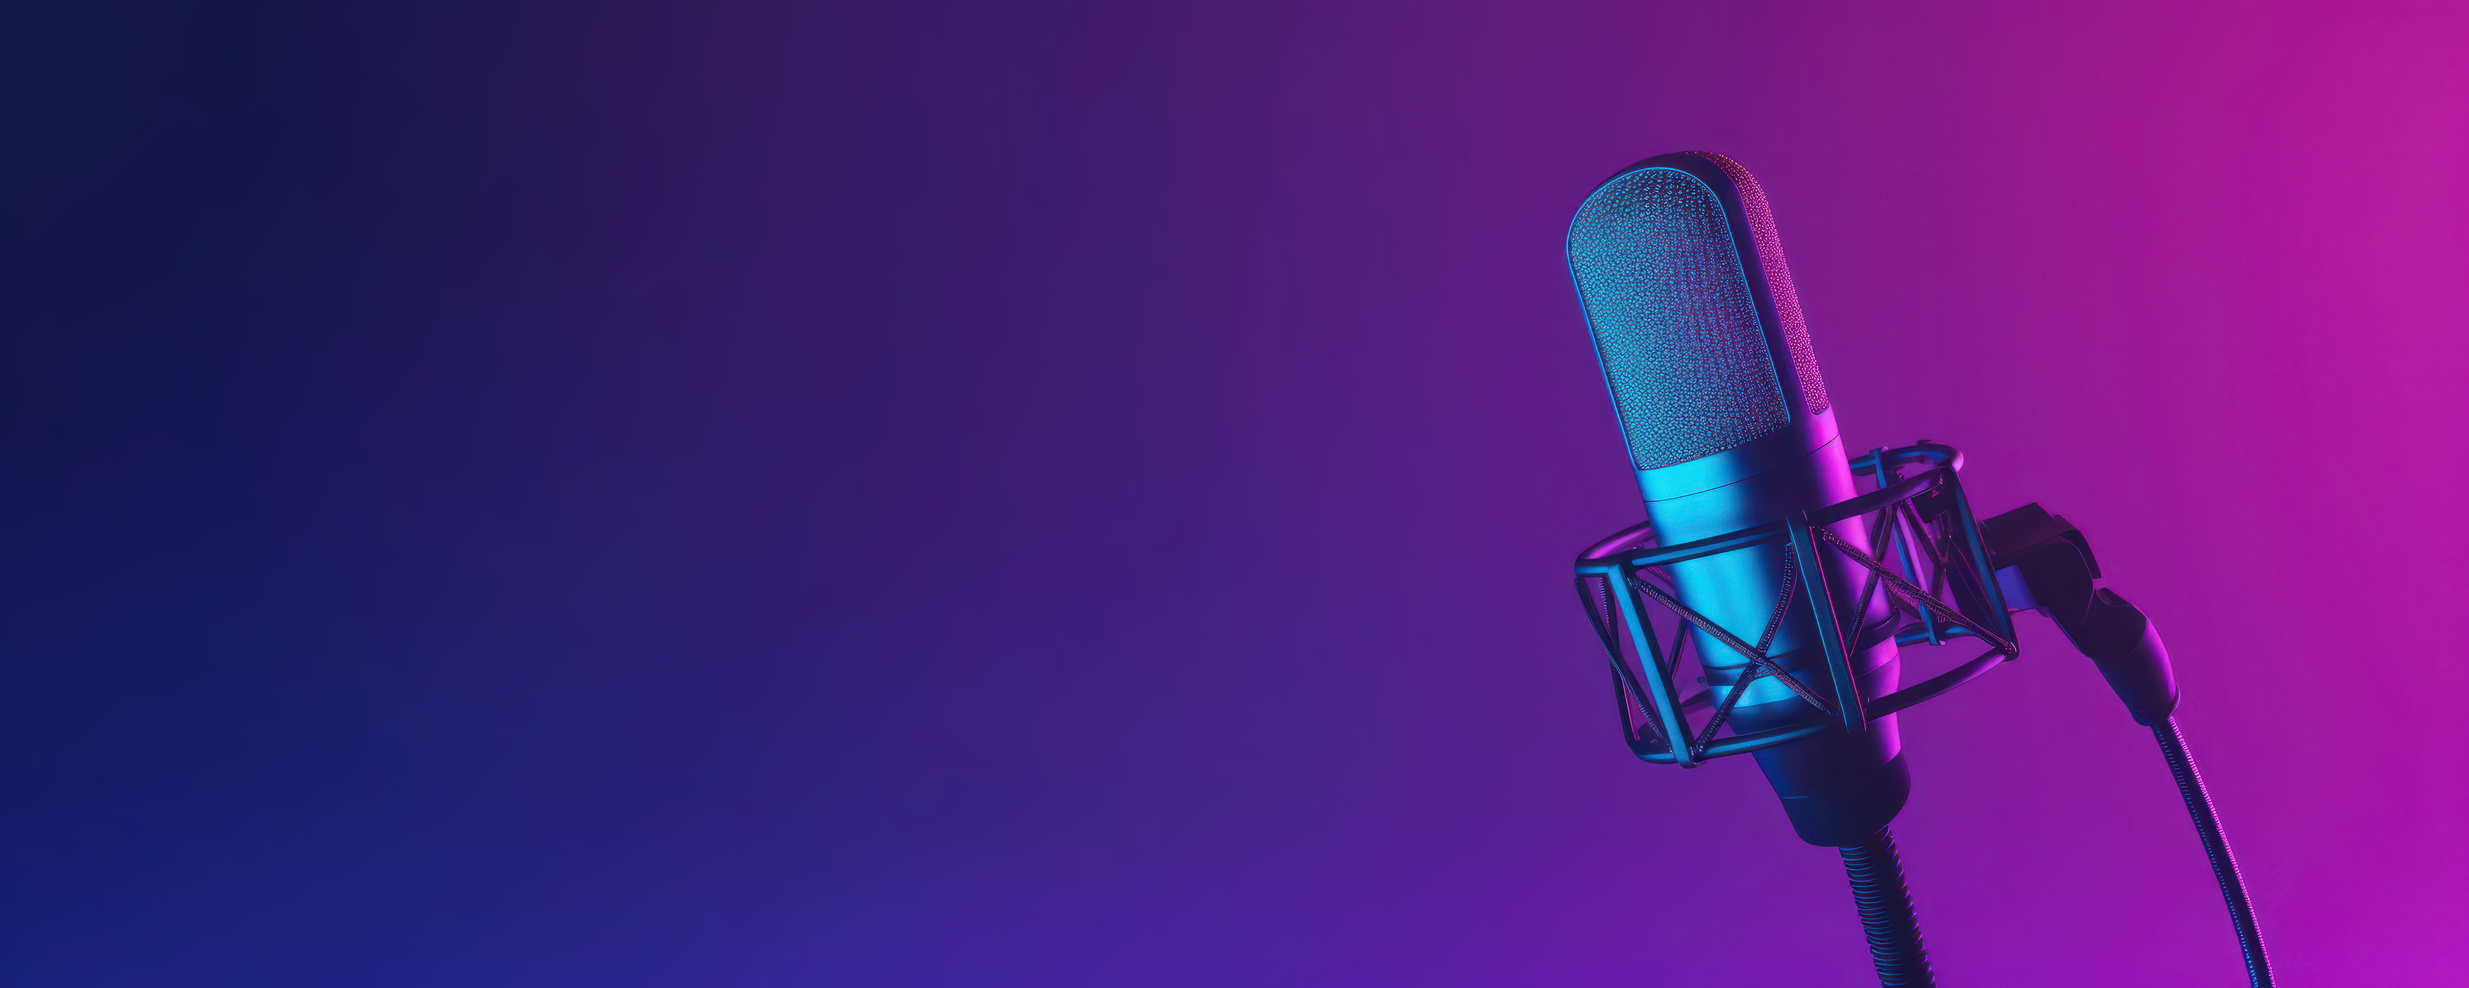 Studio Podcast Microphone on Gradient Neon Background